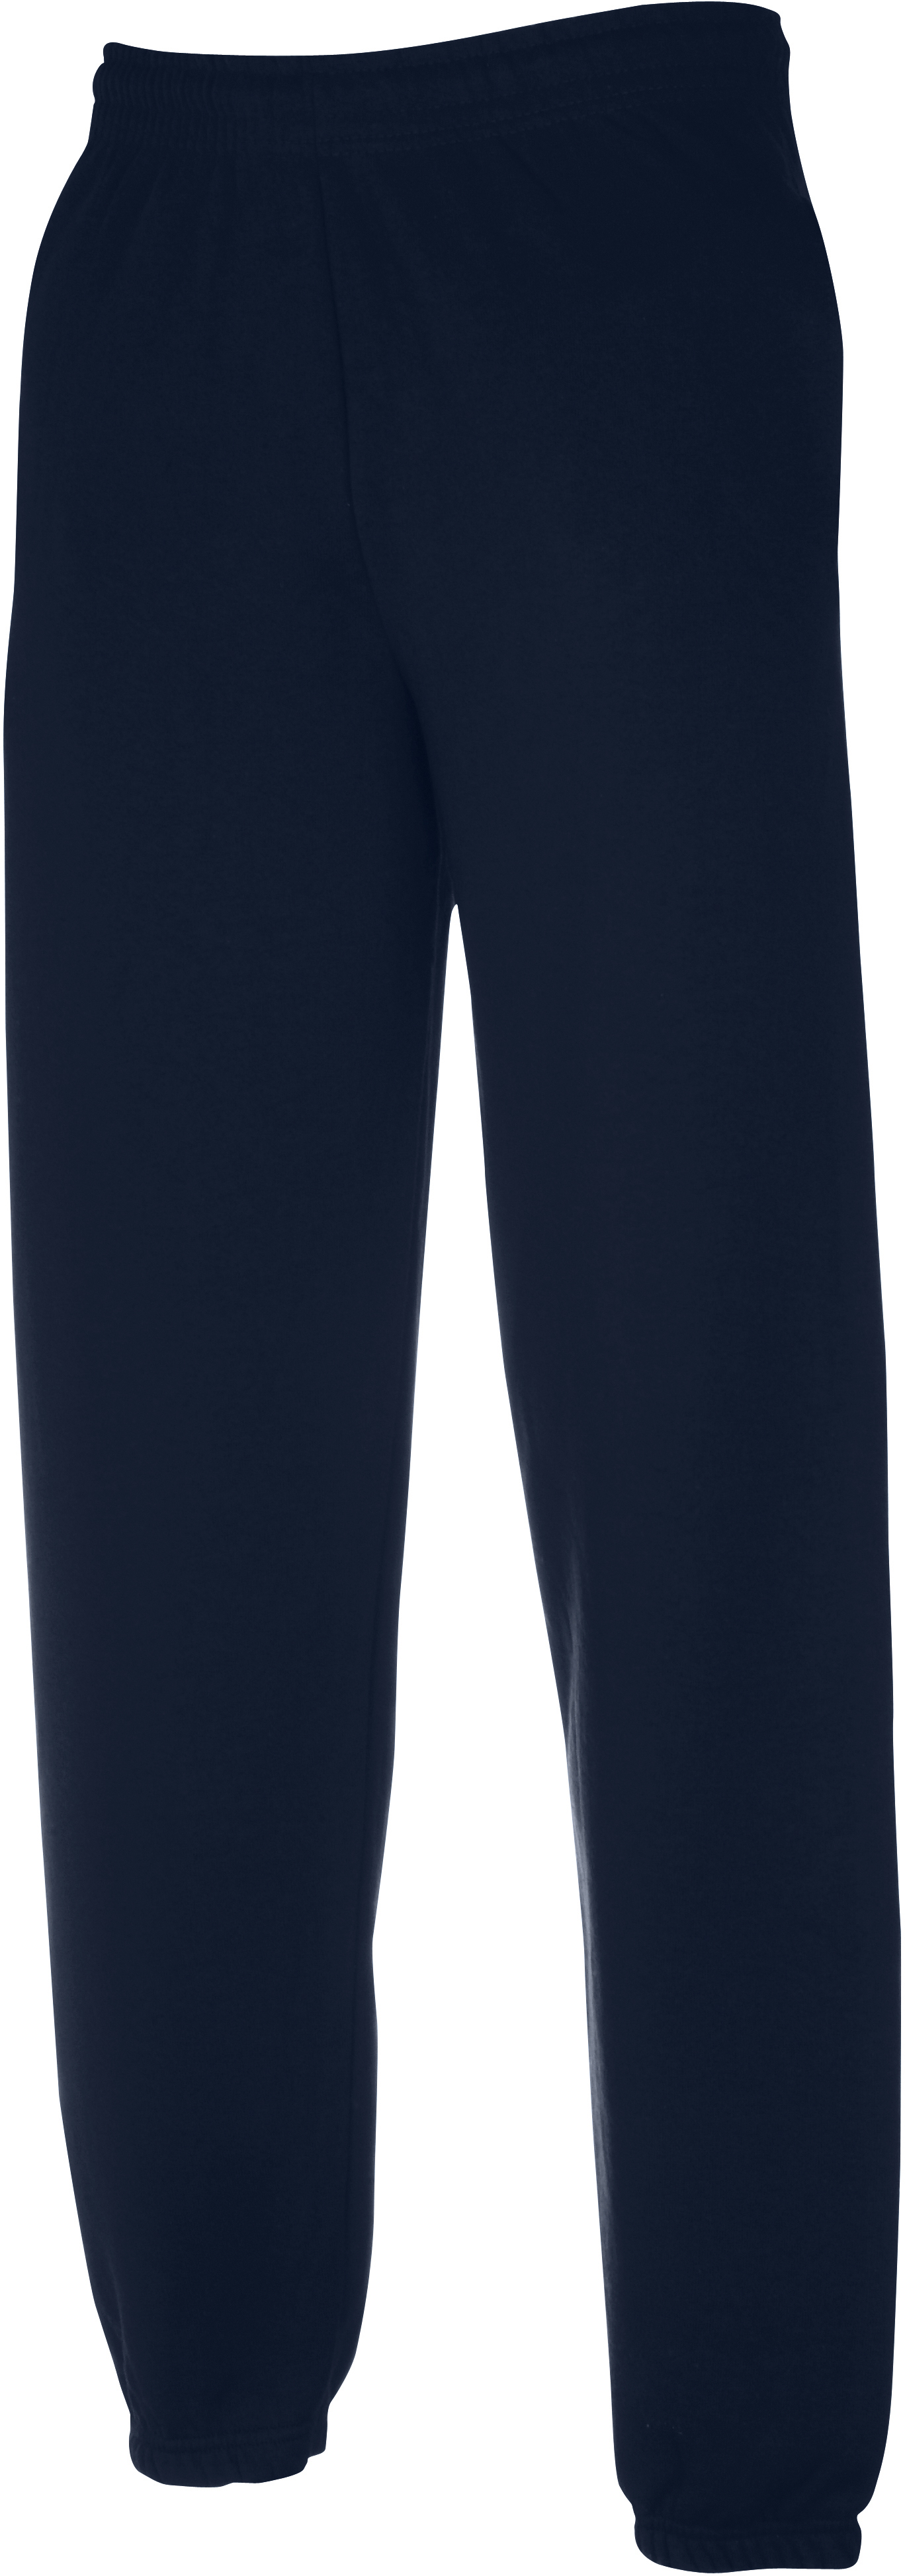 Pánské tepláky Classic Elasticated Cuff Jog Pants 64026 Barva: dark navy, Velikost: L